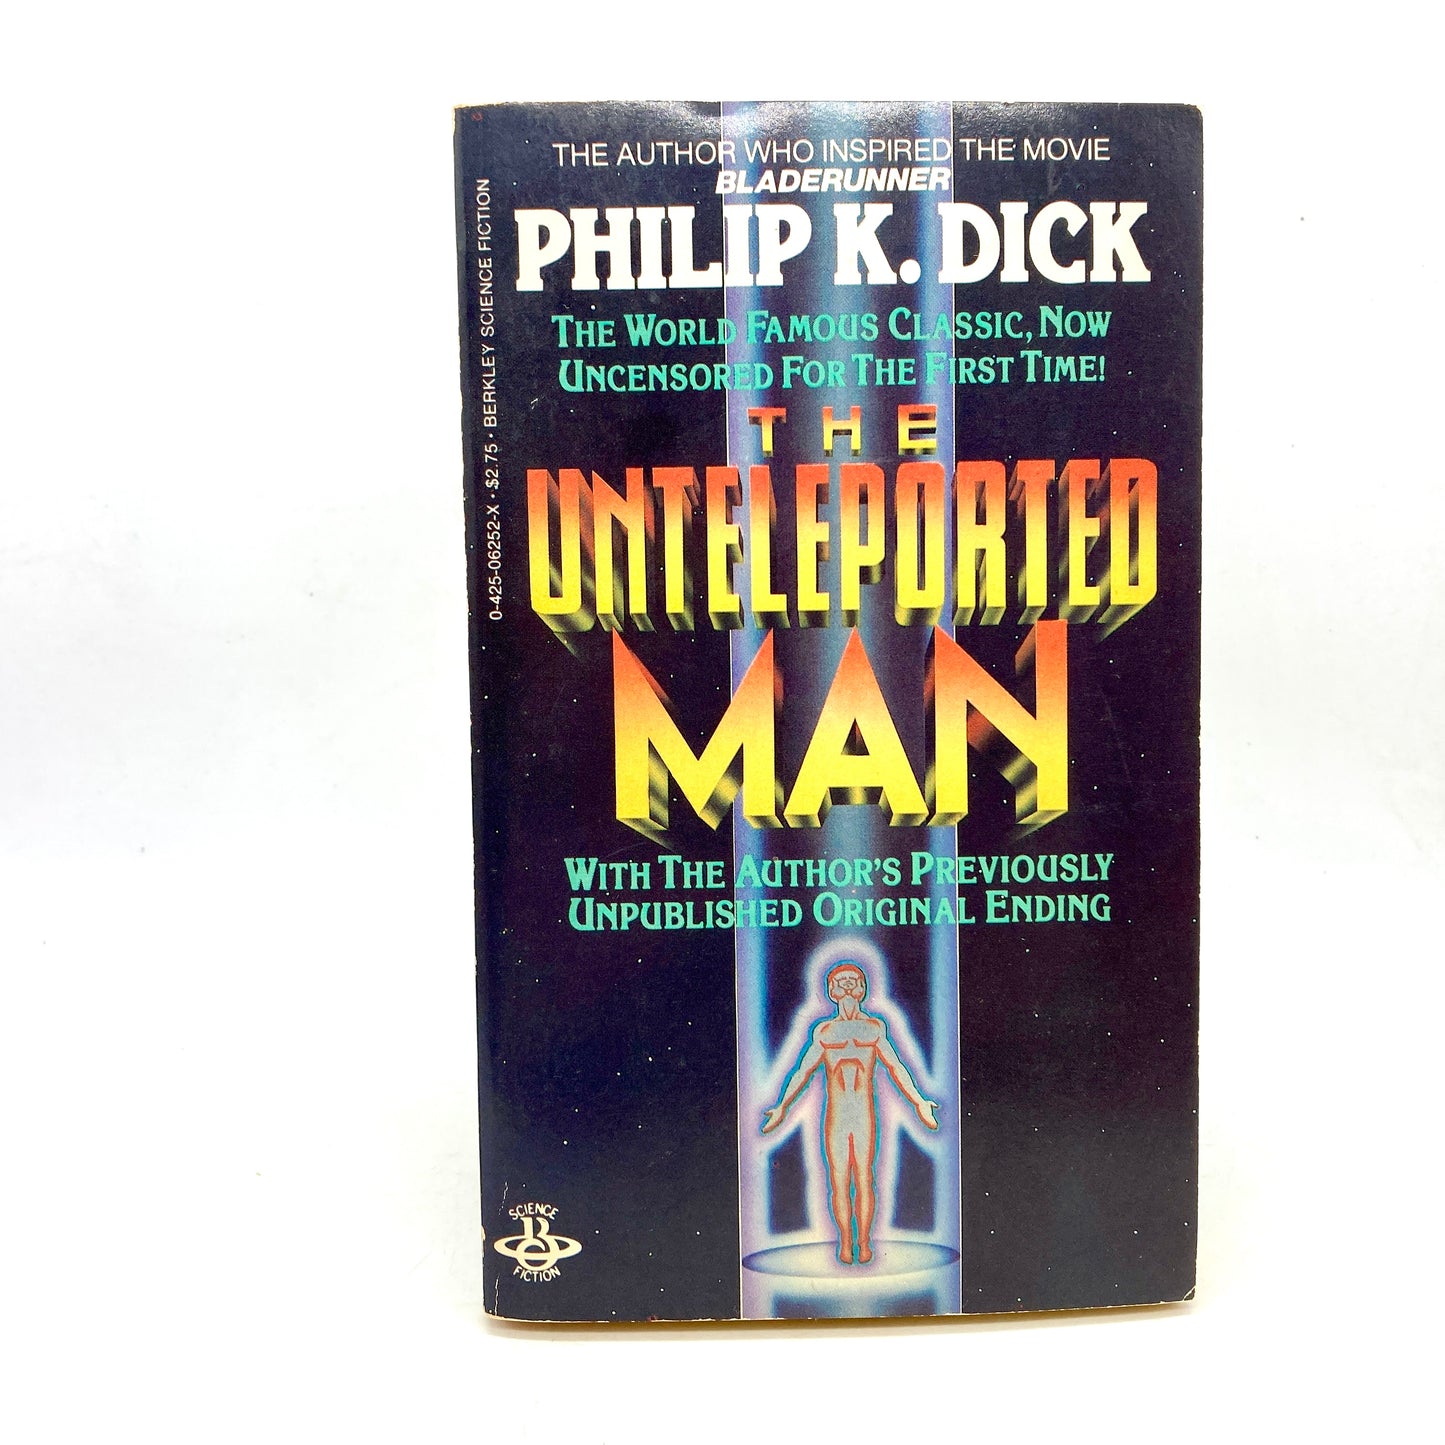 DICK, Philip K. "The Unteleported Man" [Berkley Books, 1983]